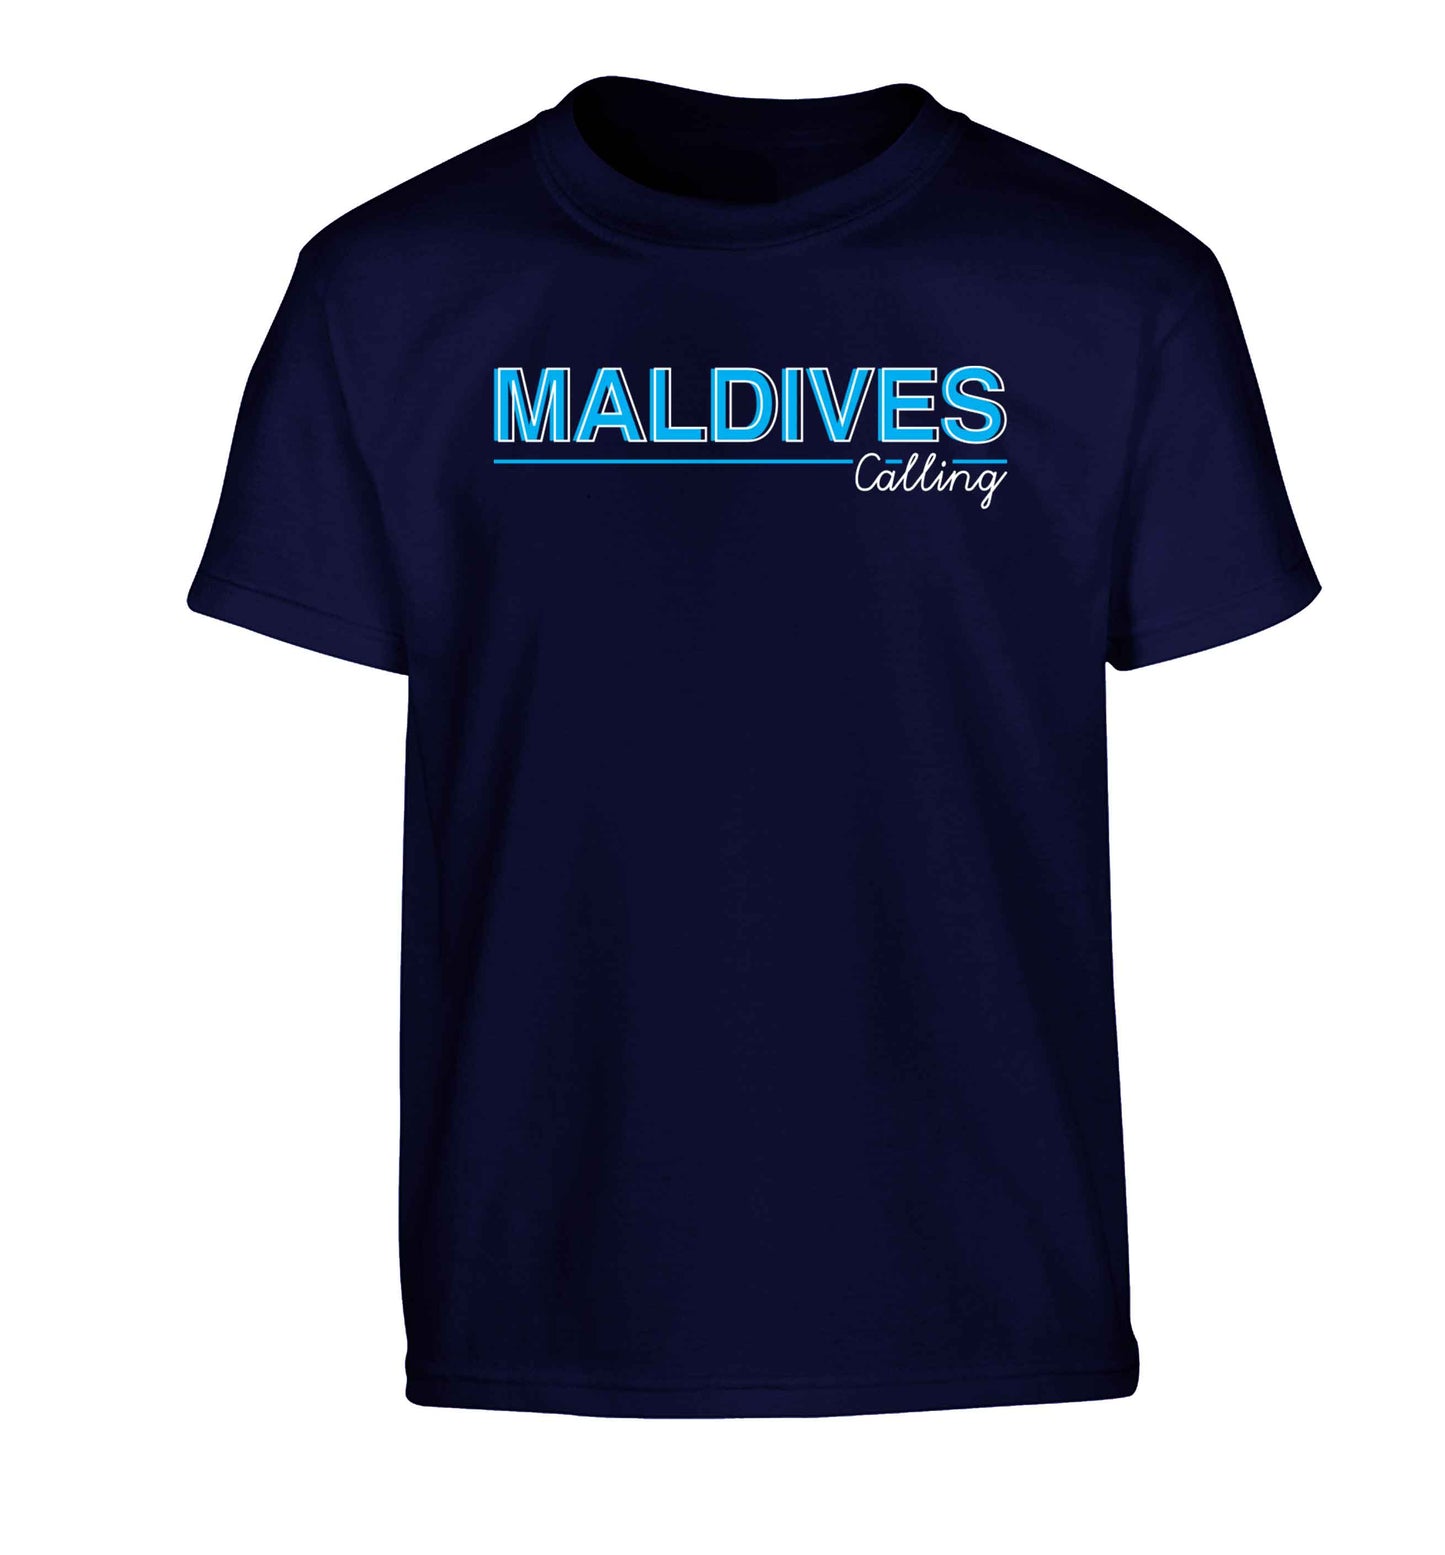 Maldives calling Children's navy Tshirt 12-13 Years